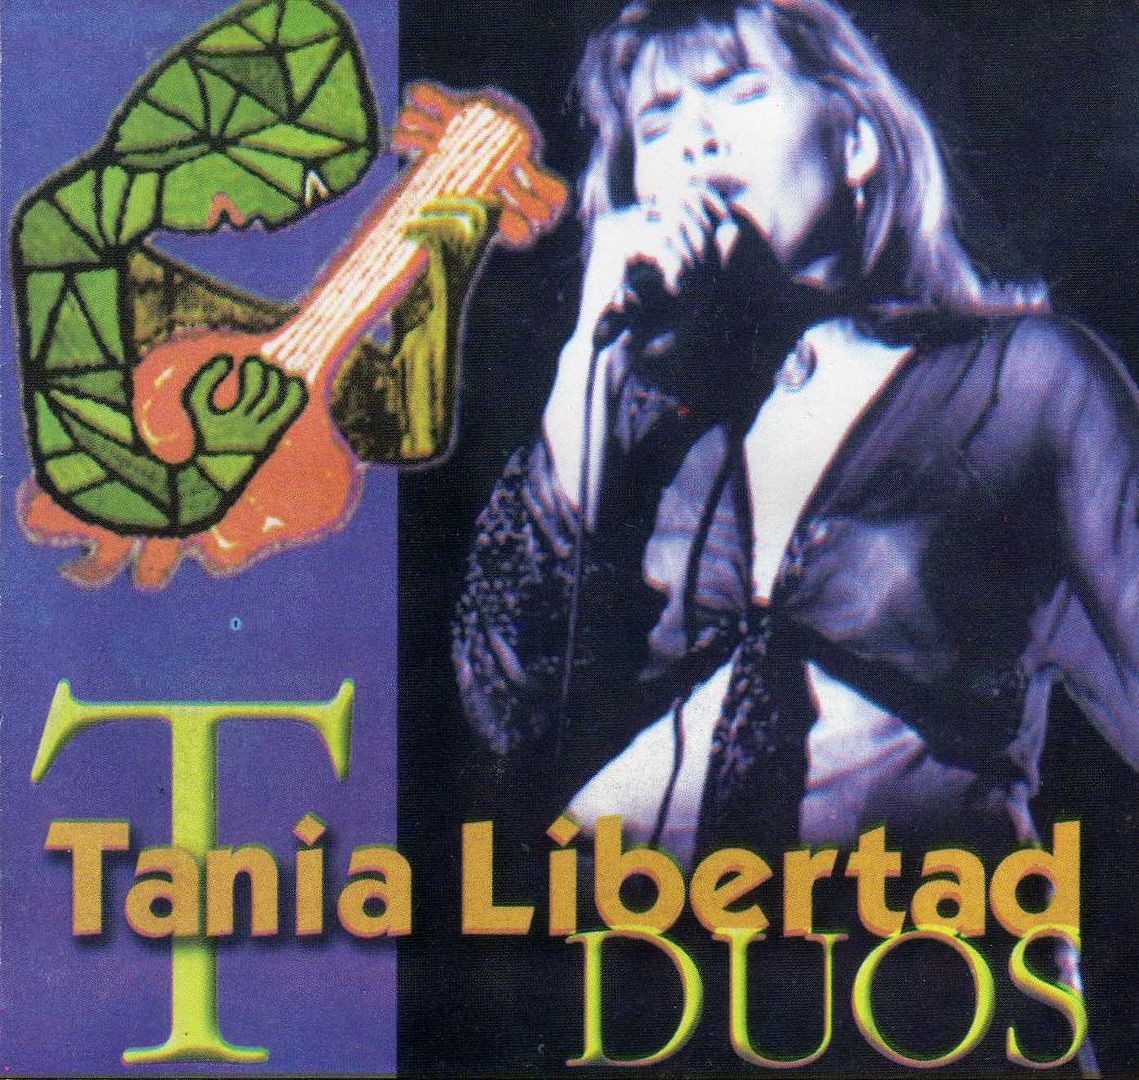 img013 - Tania Libertad - Duos MP3